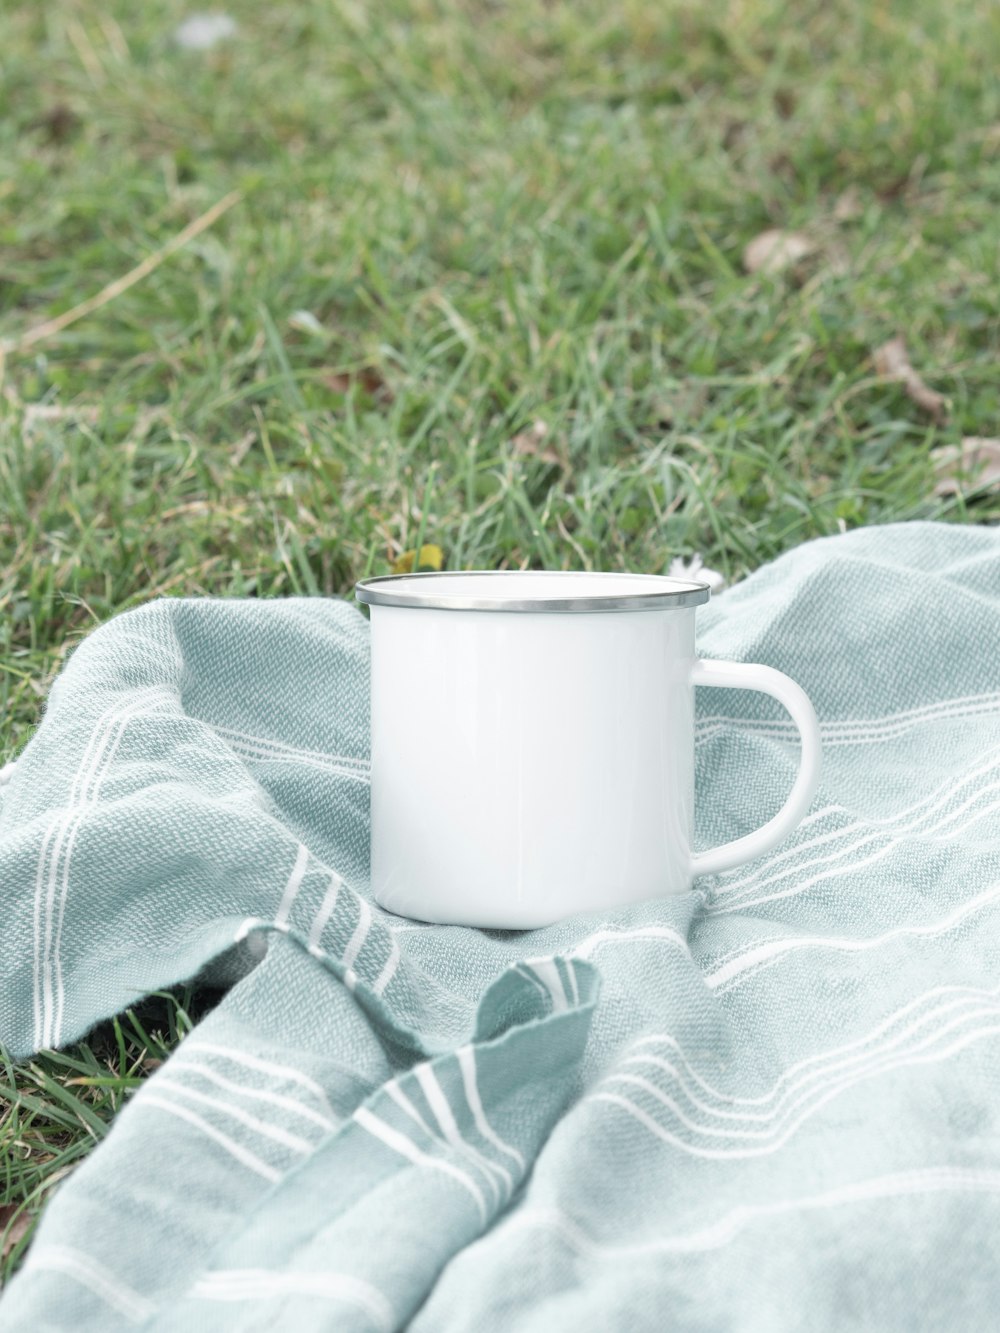 white ceramic mug on gray and white textile